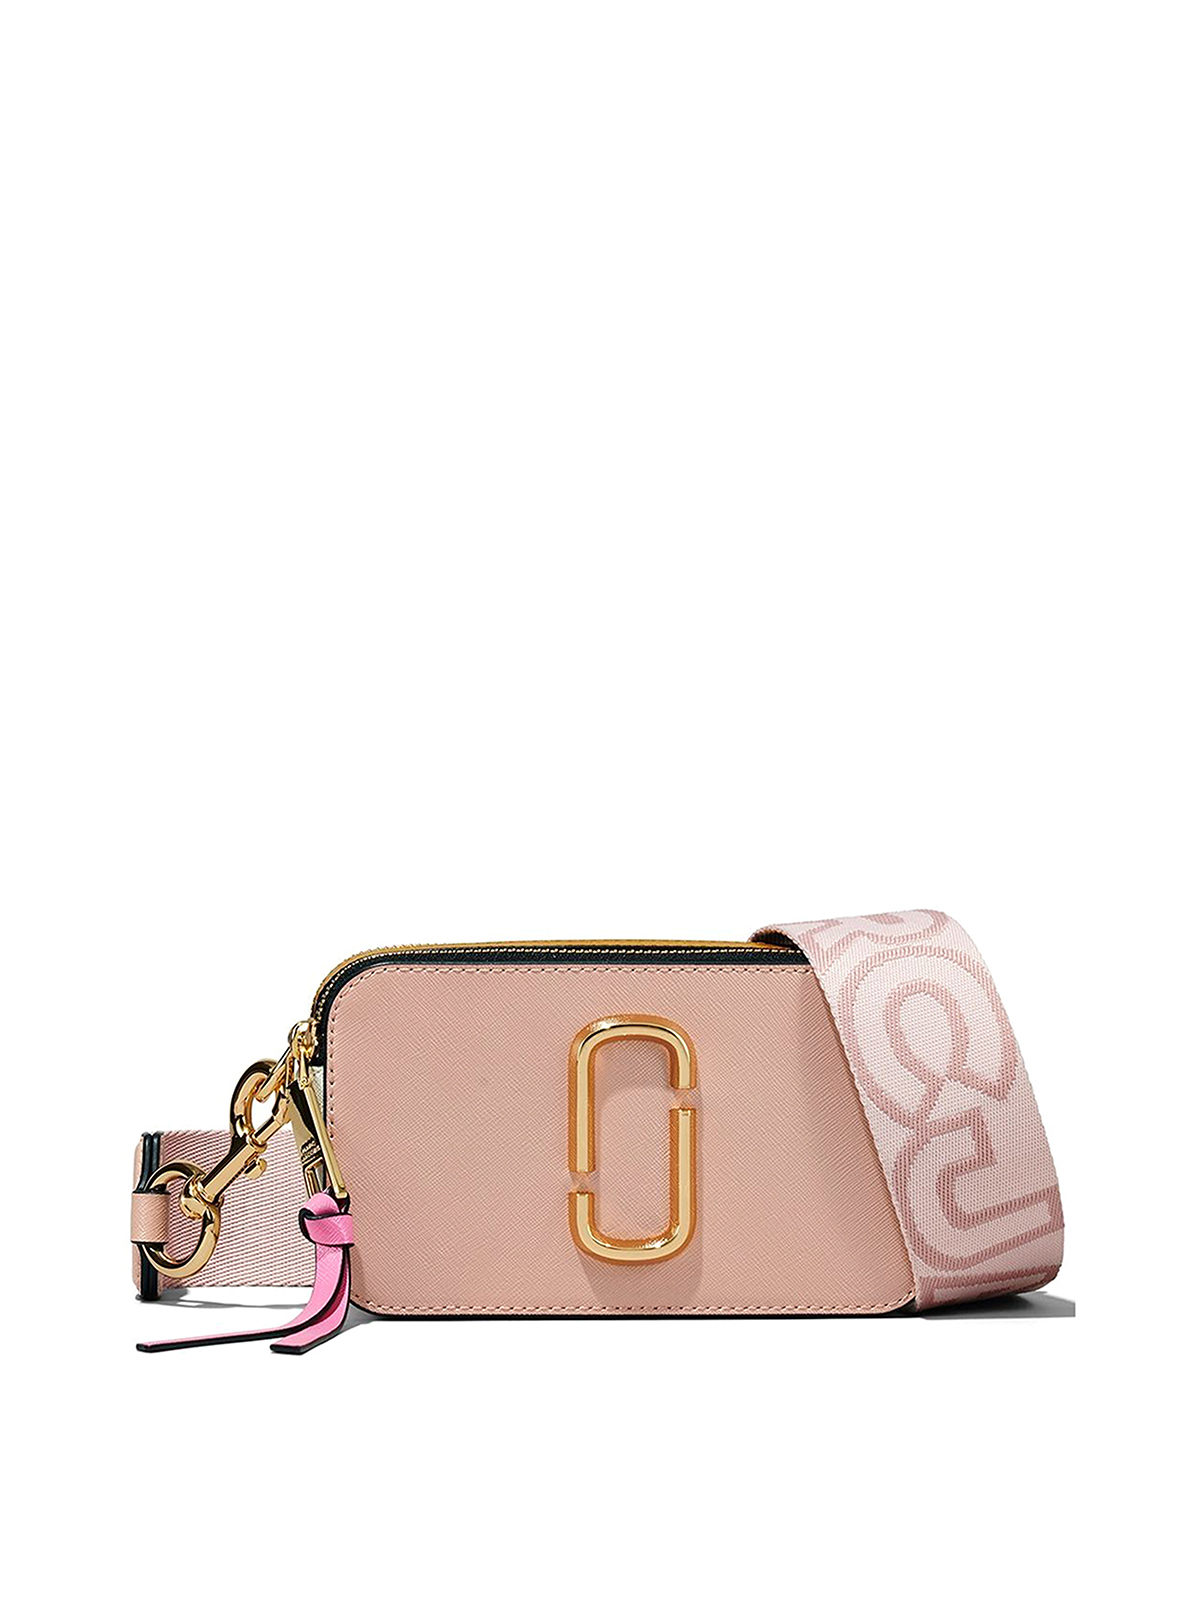 Marc Jacobs Crossbody Snapshot Shoulder Bag gray pink Free